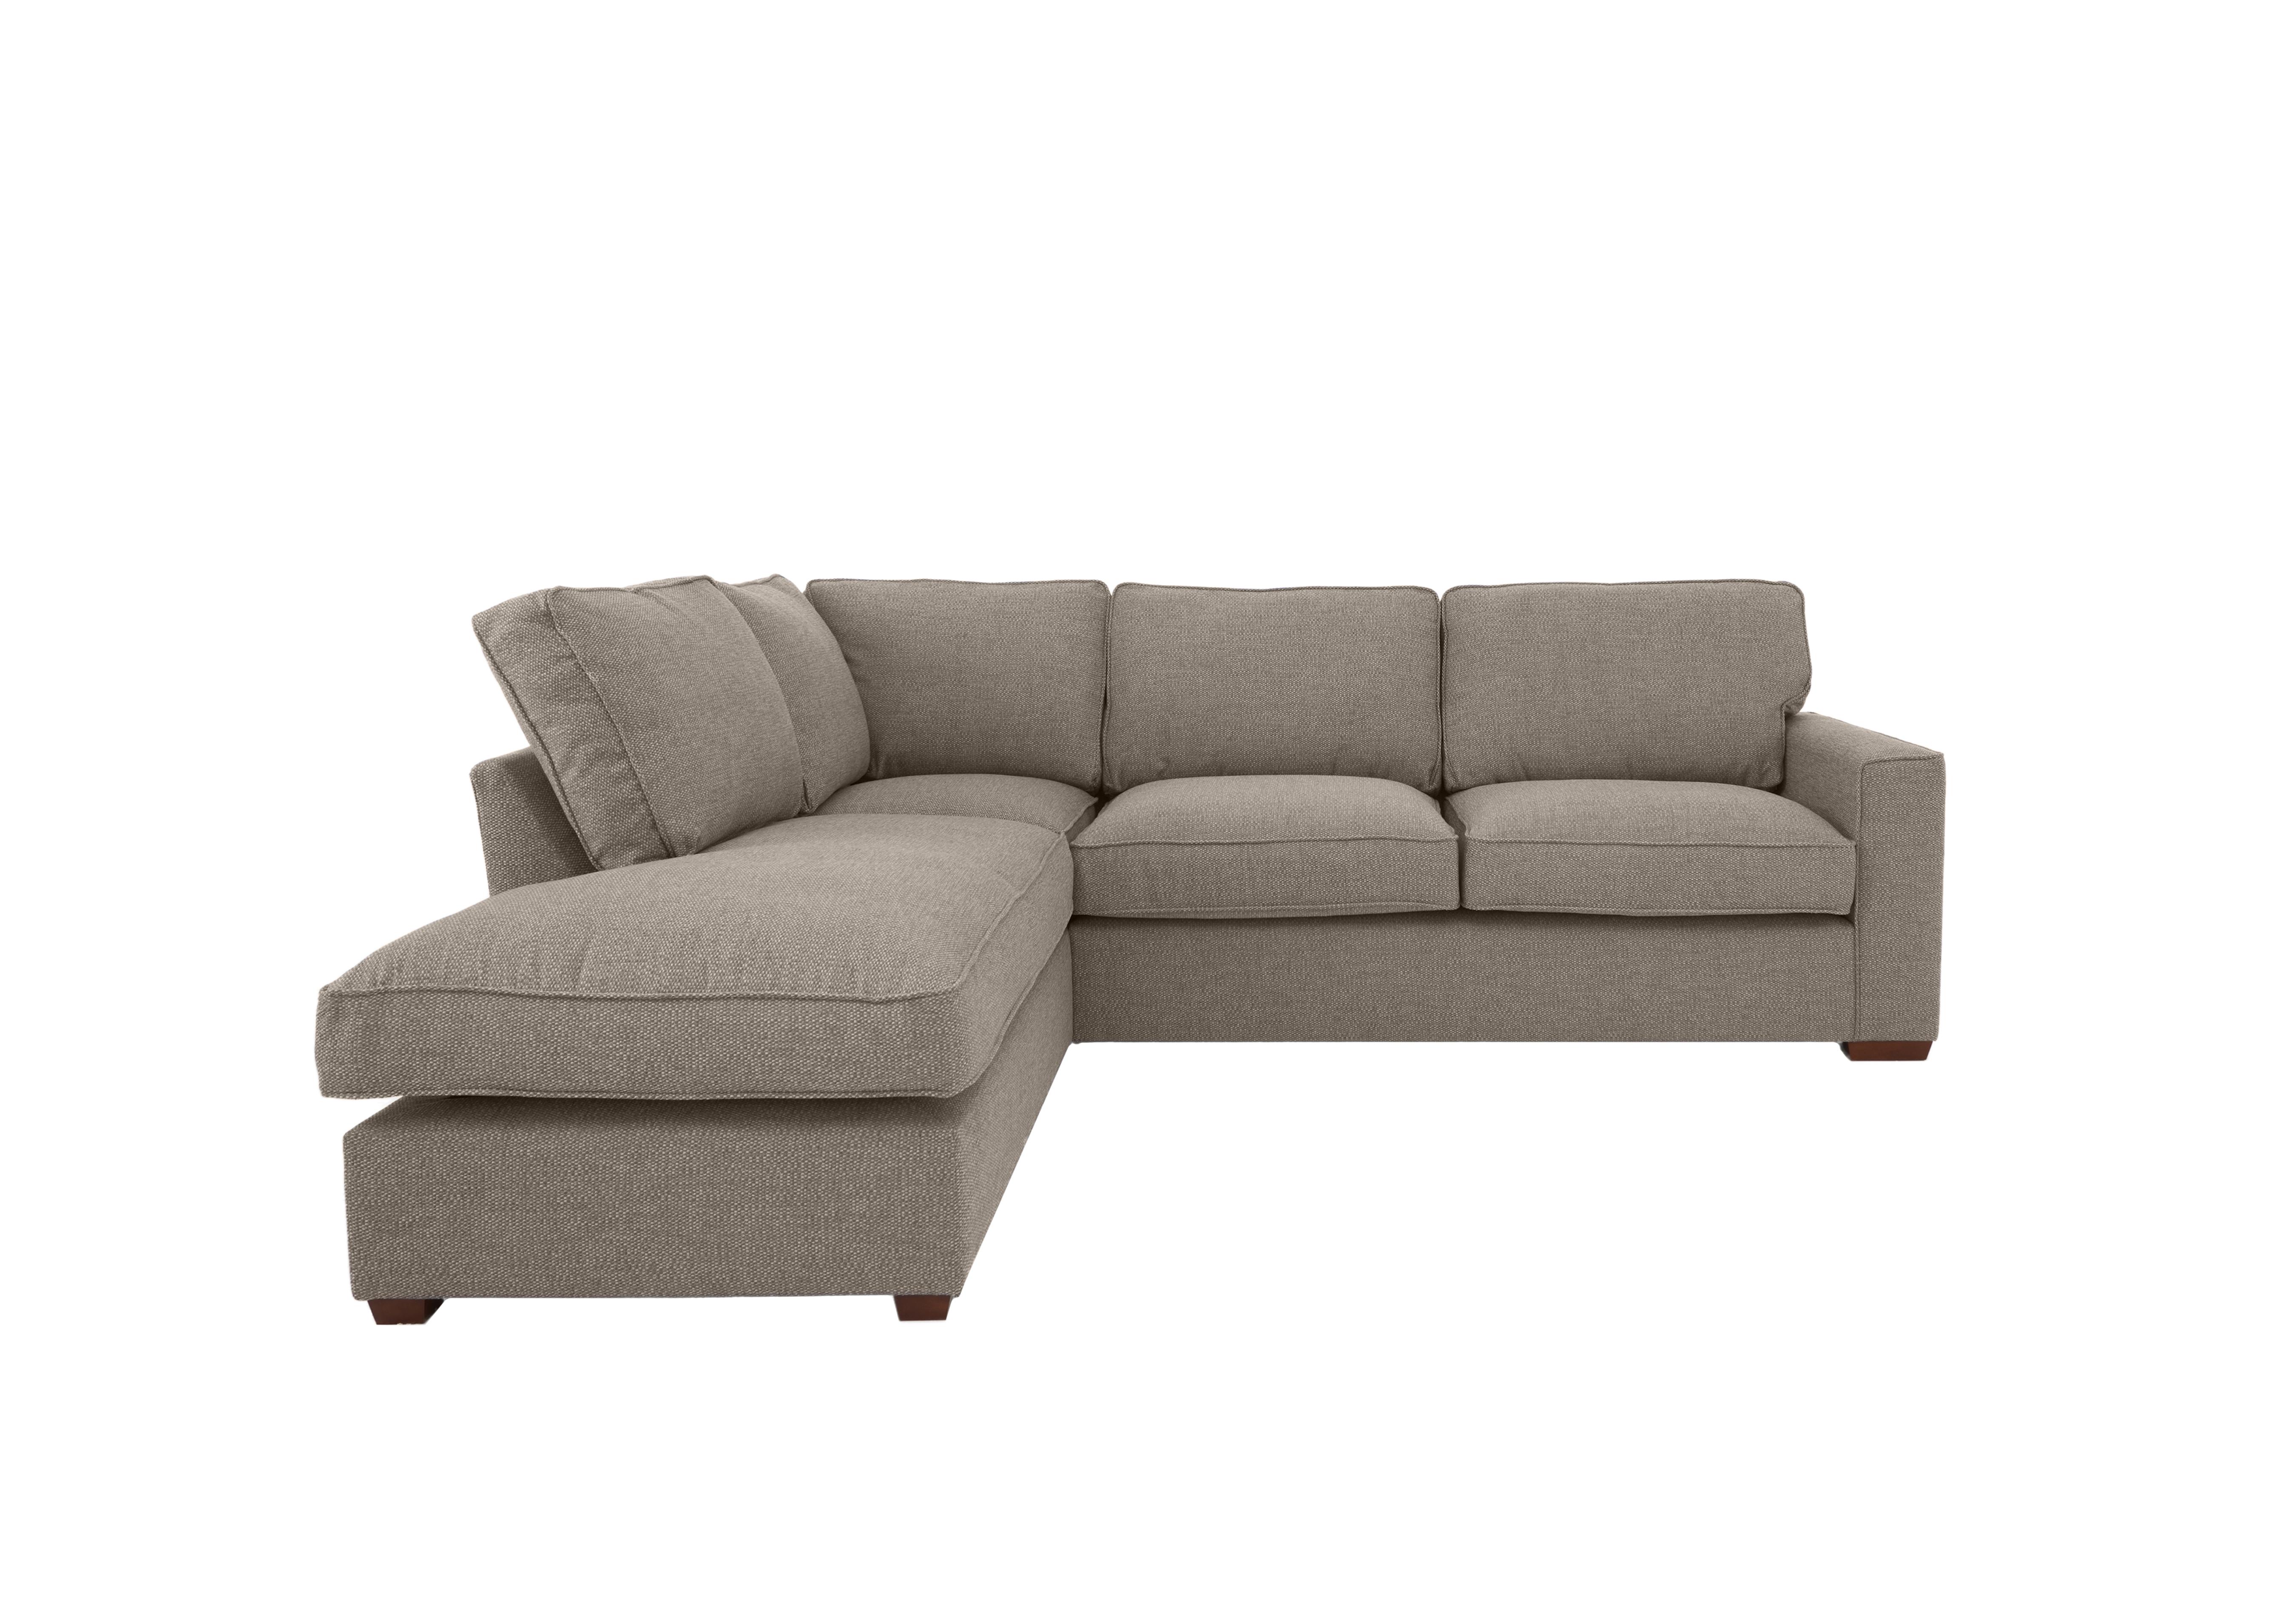 Cory Fabric Corner Chaise Classic Back Sofa Bed in Dallas Natural on Furniture Village